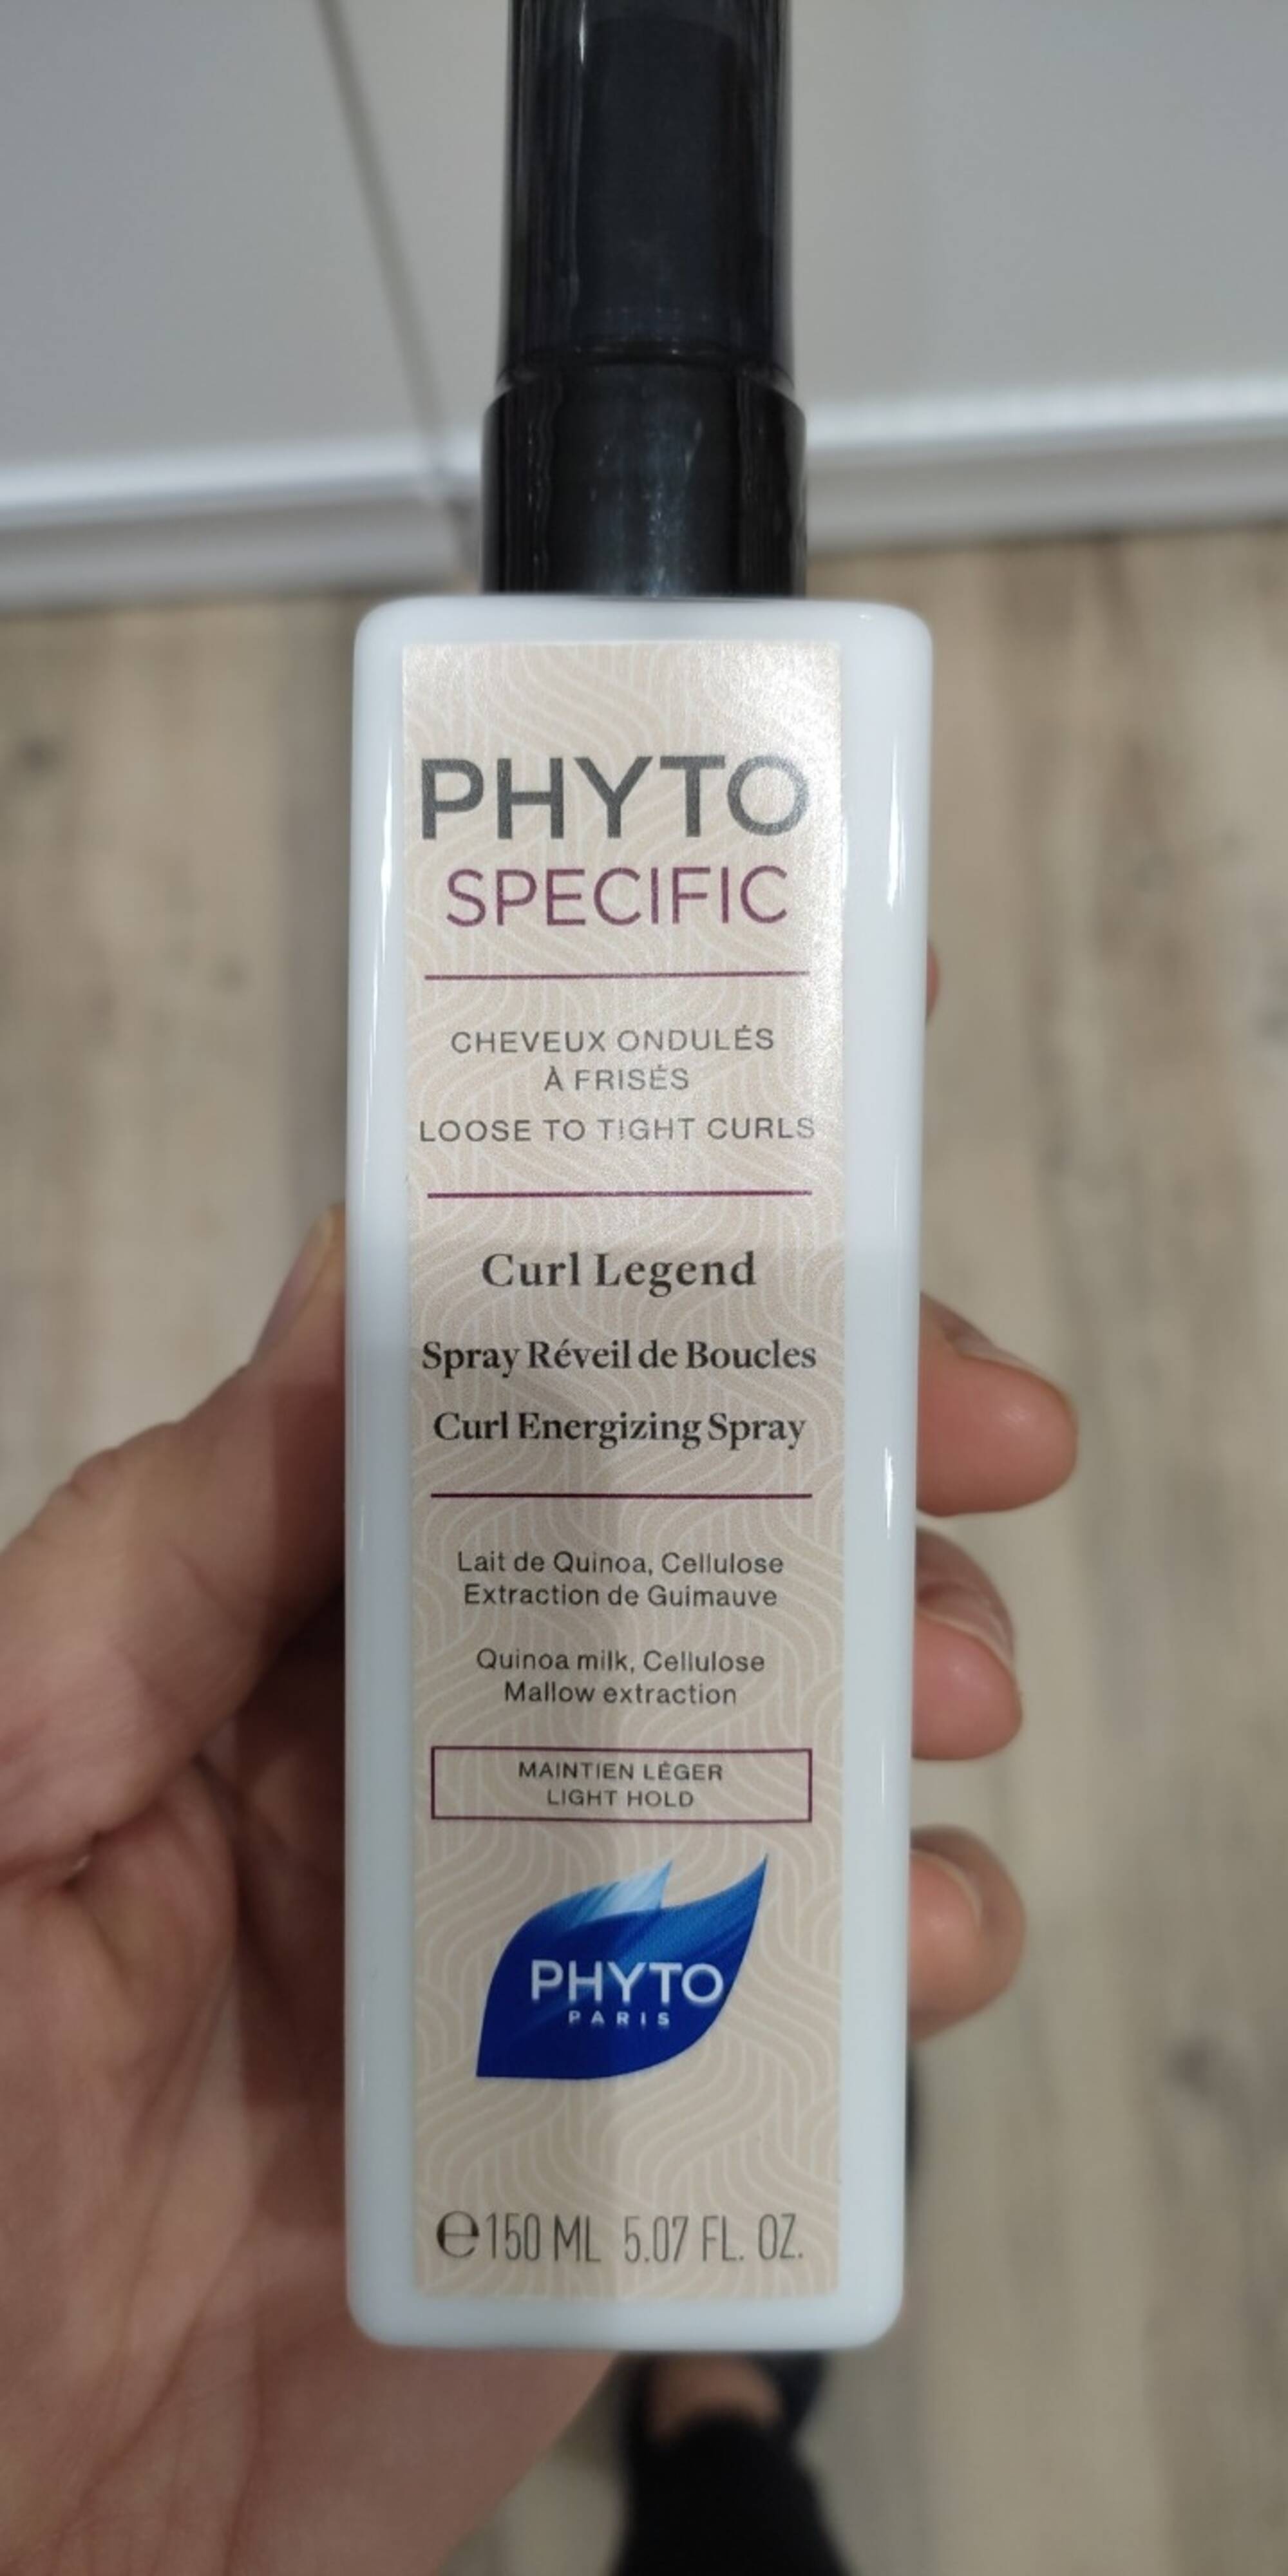 PHYTO PARIS - Phyto specific - Spray réveil de boucles